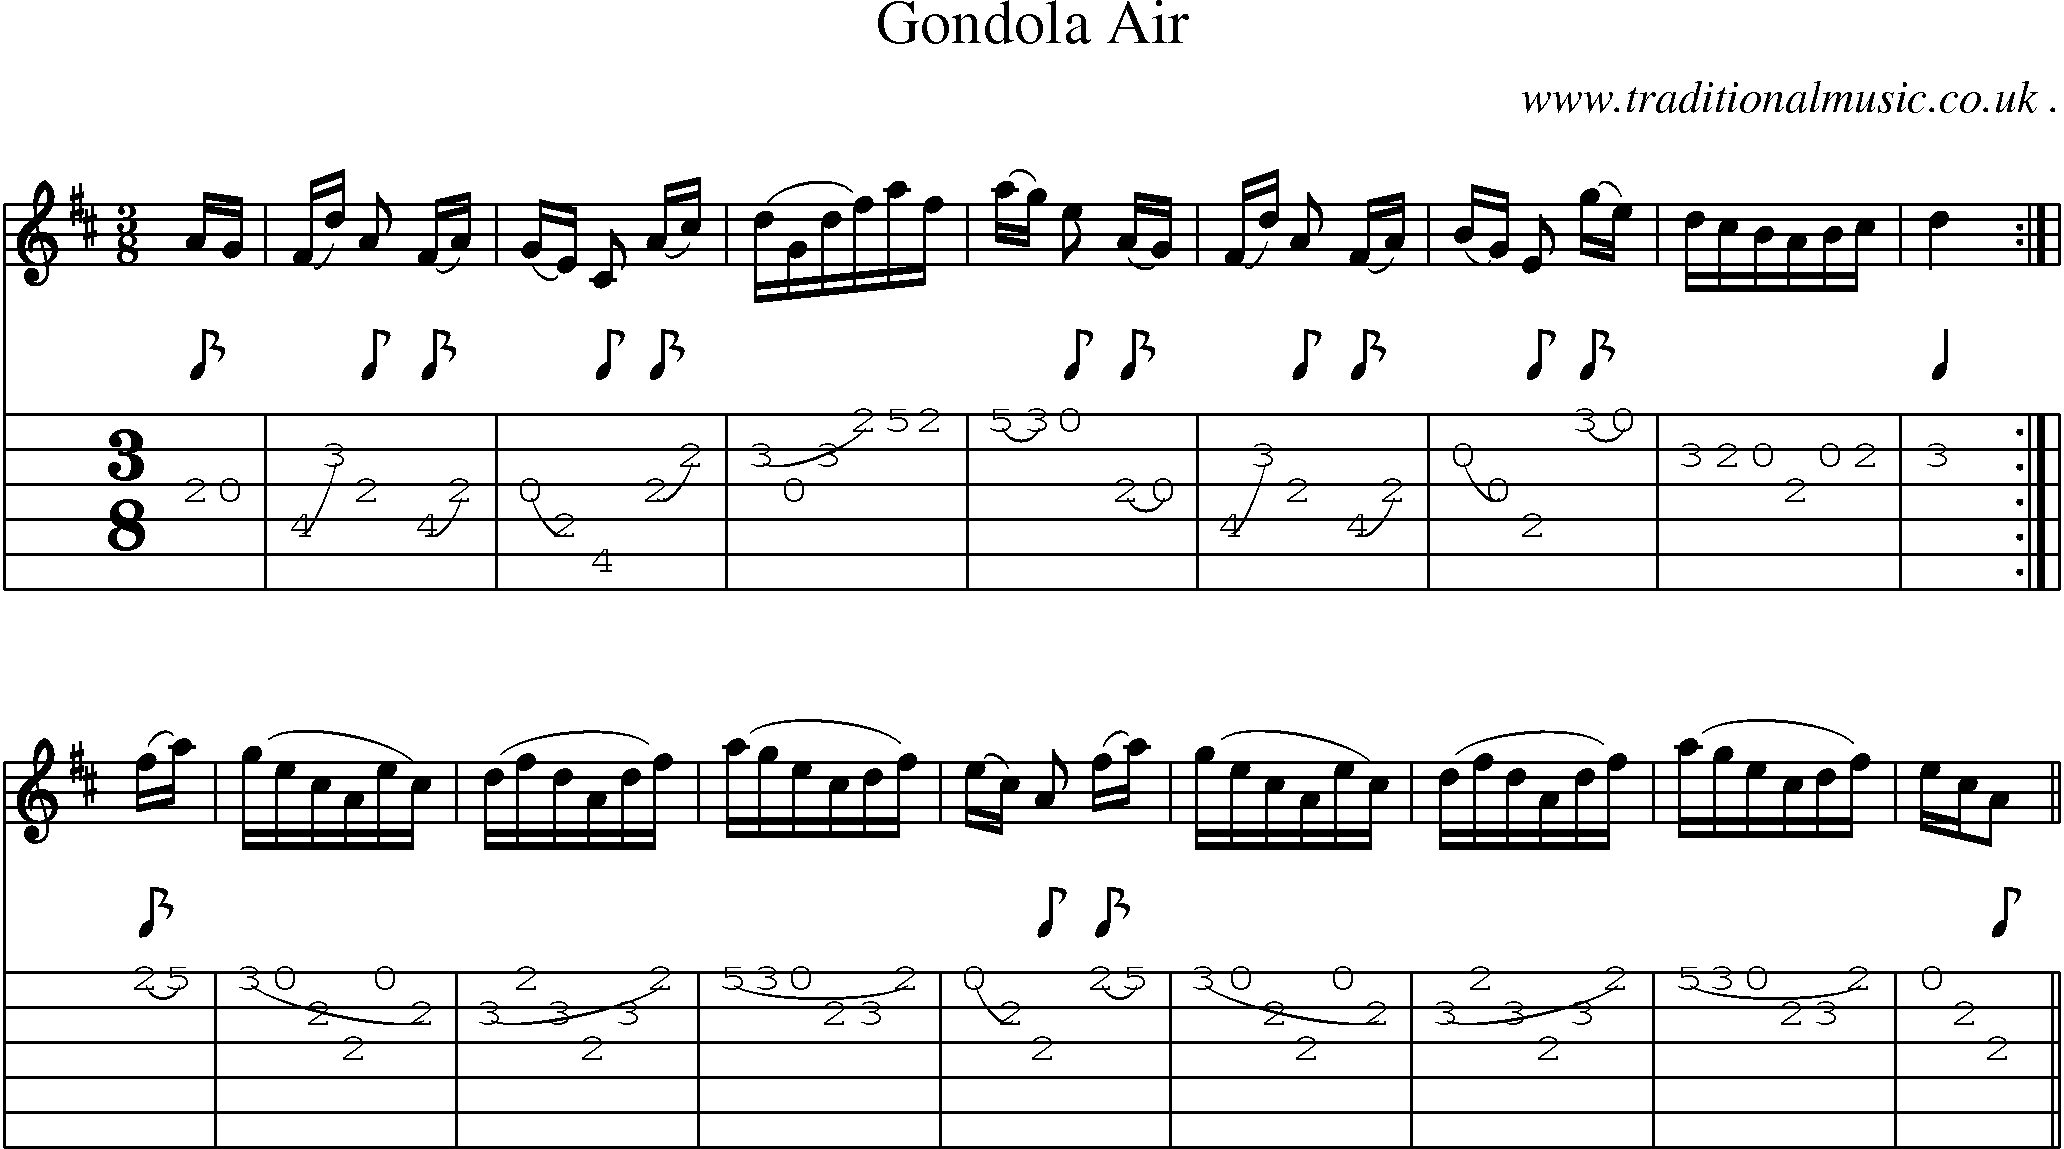 Sheet-Music and Guitar Tabs for Gondola Air